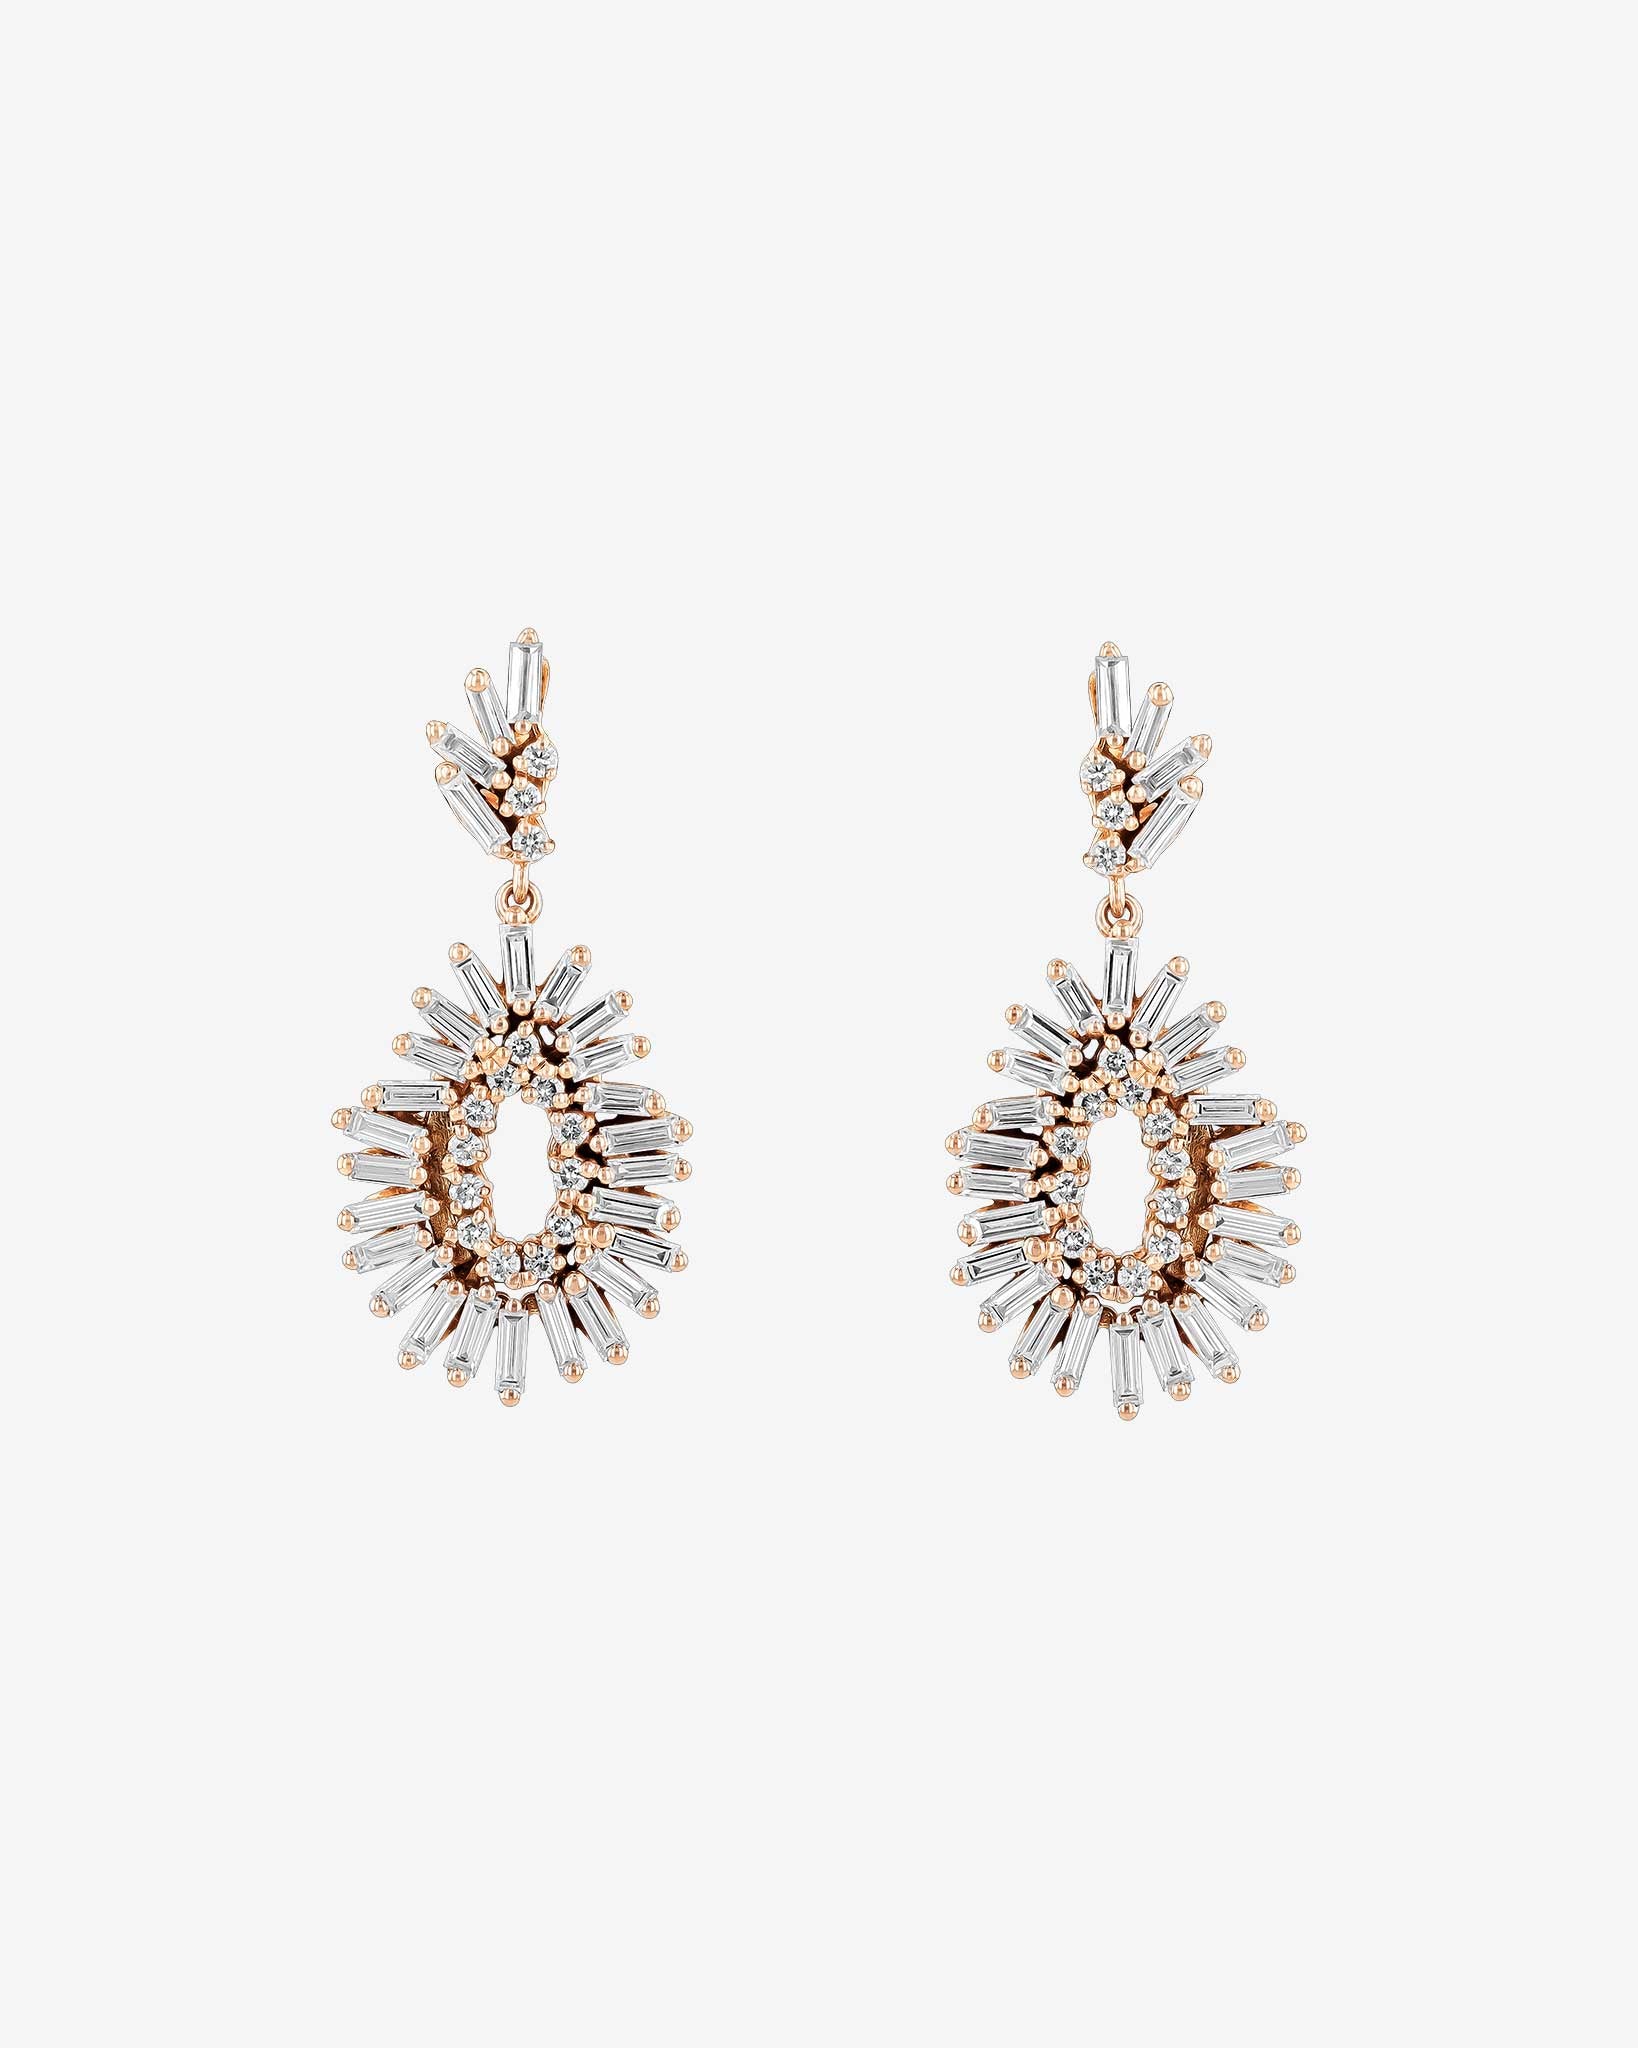 Suzanne Kalan Classic Diamond Mini Tear Drop Earrings in 18k rose gold